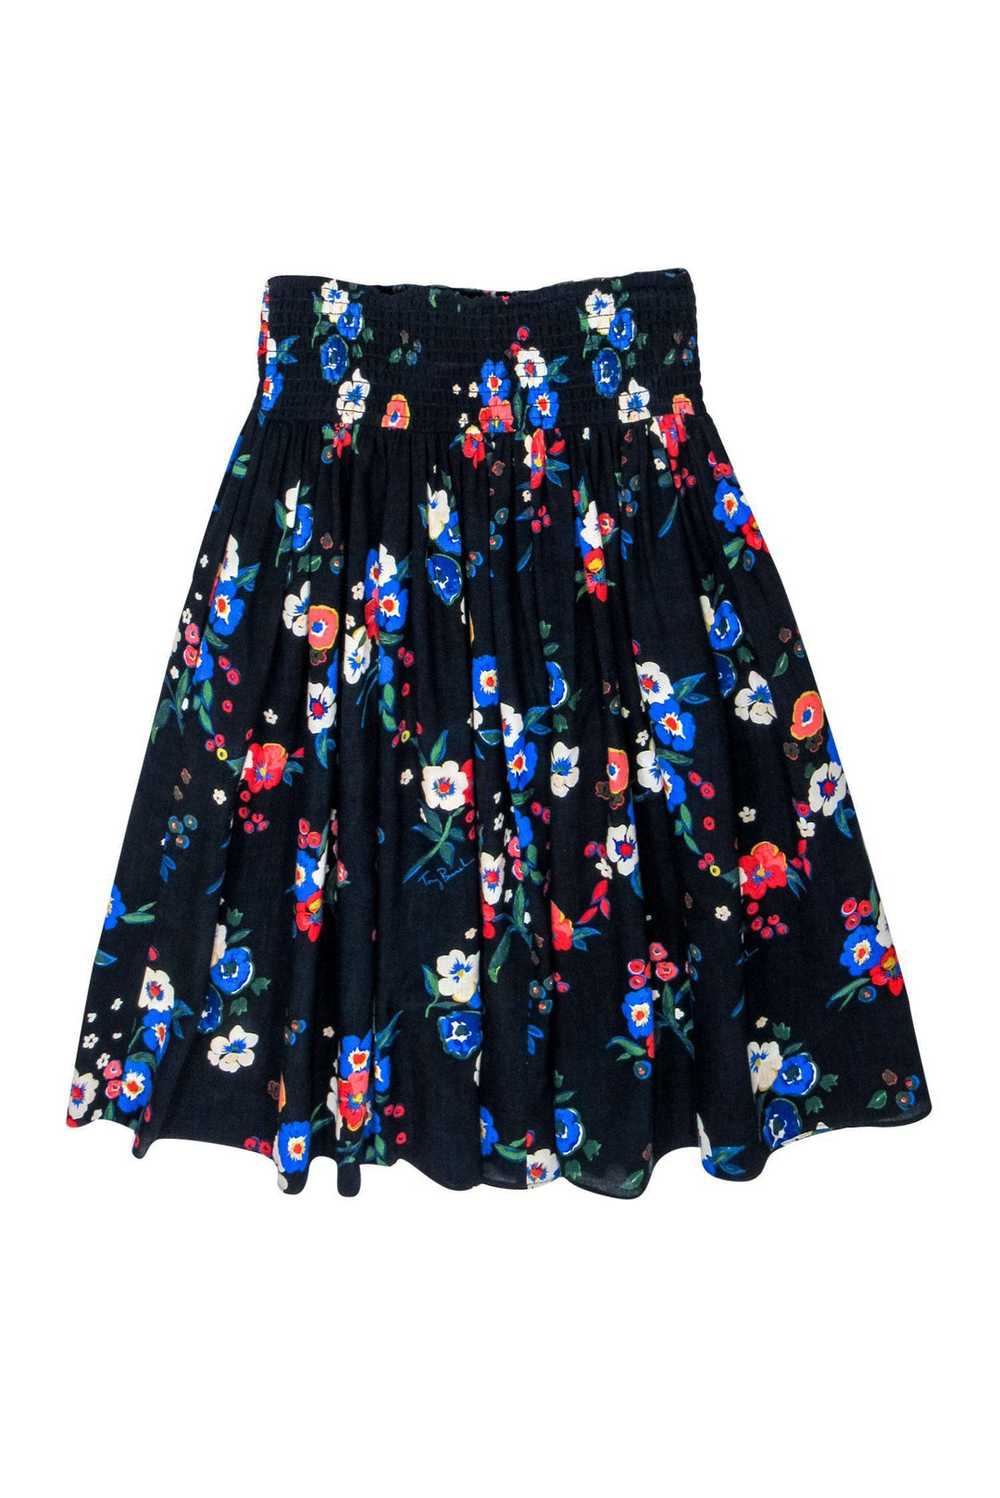 Tory Burch - Navy Floral Smocked Waist Skirt Sz 4 - image 2